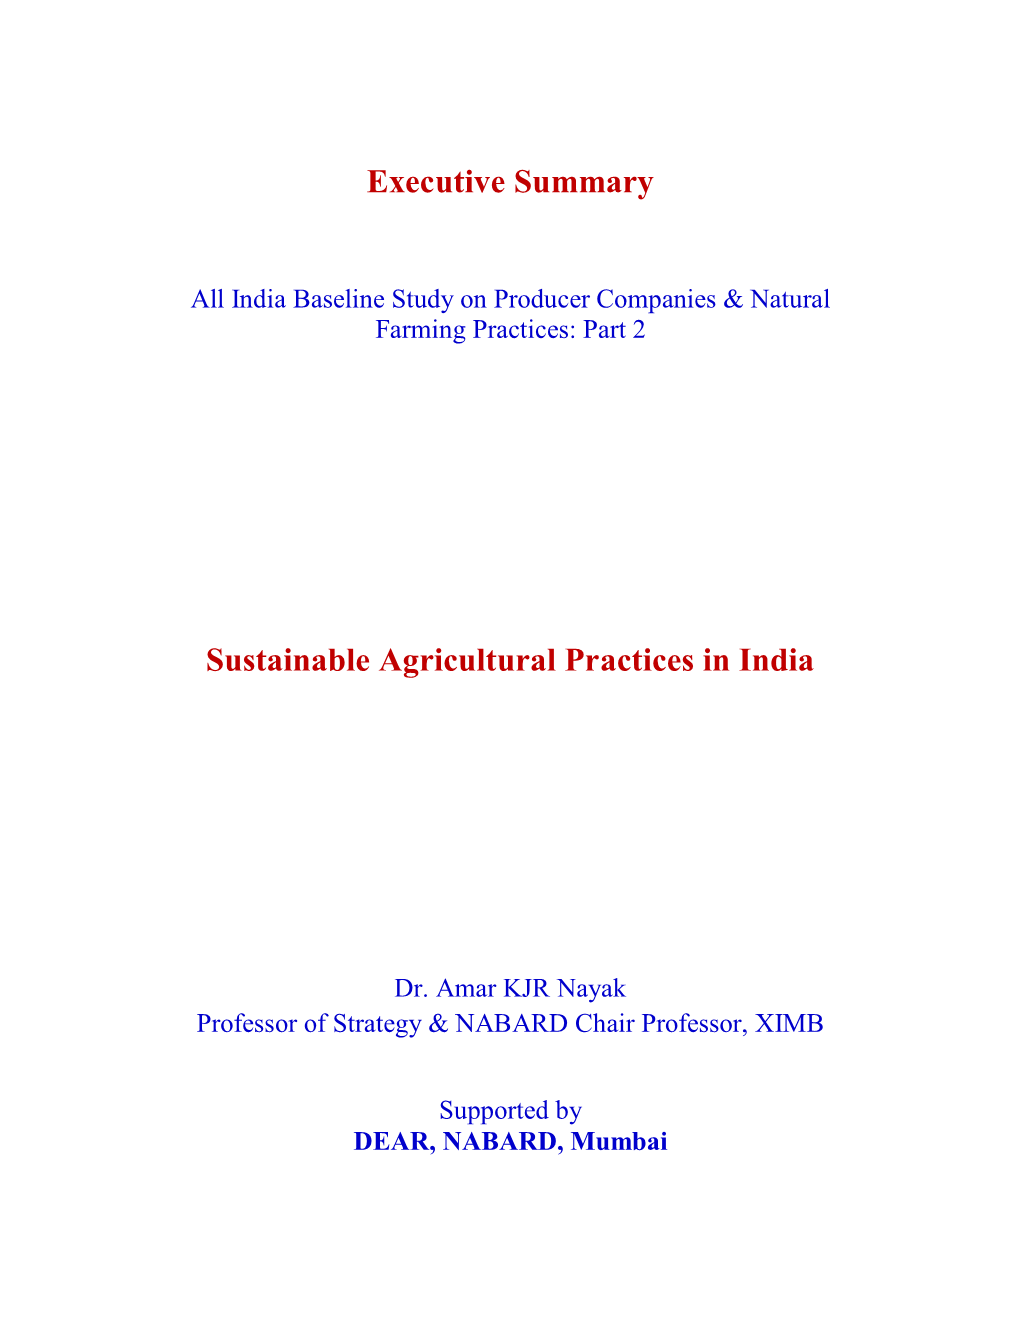 India Baseline Study on Producer Companies Part2